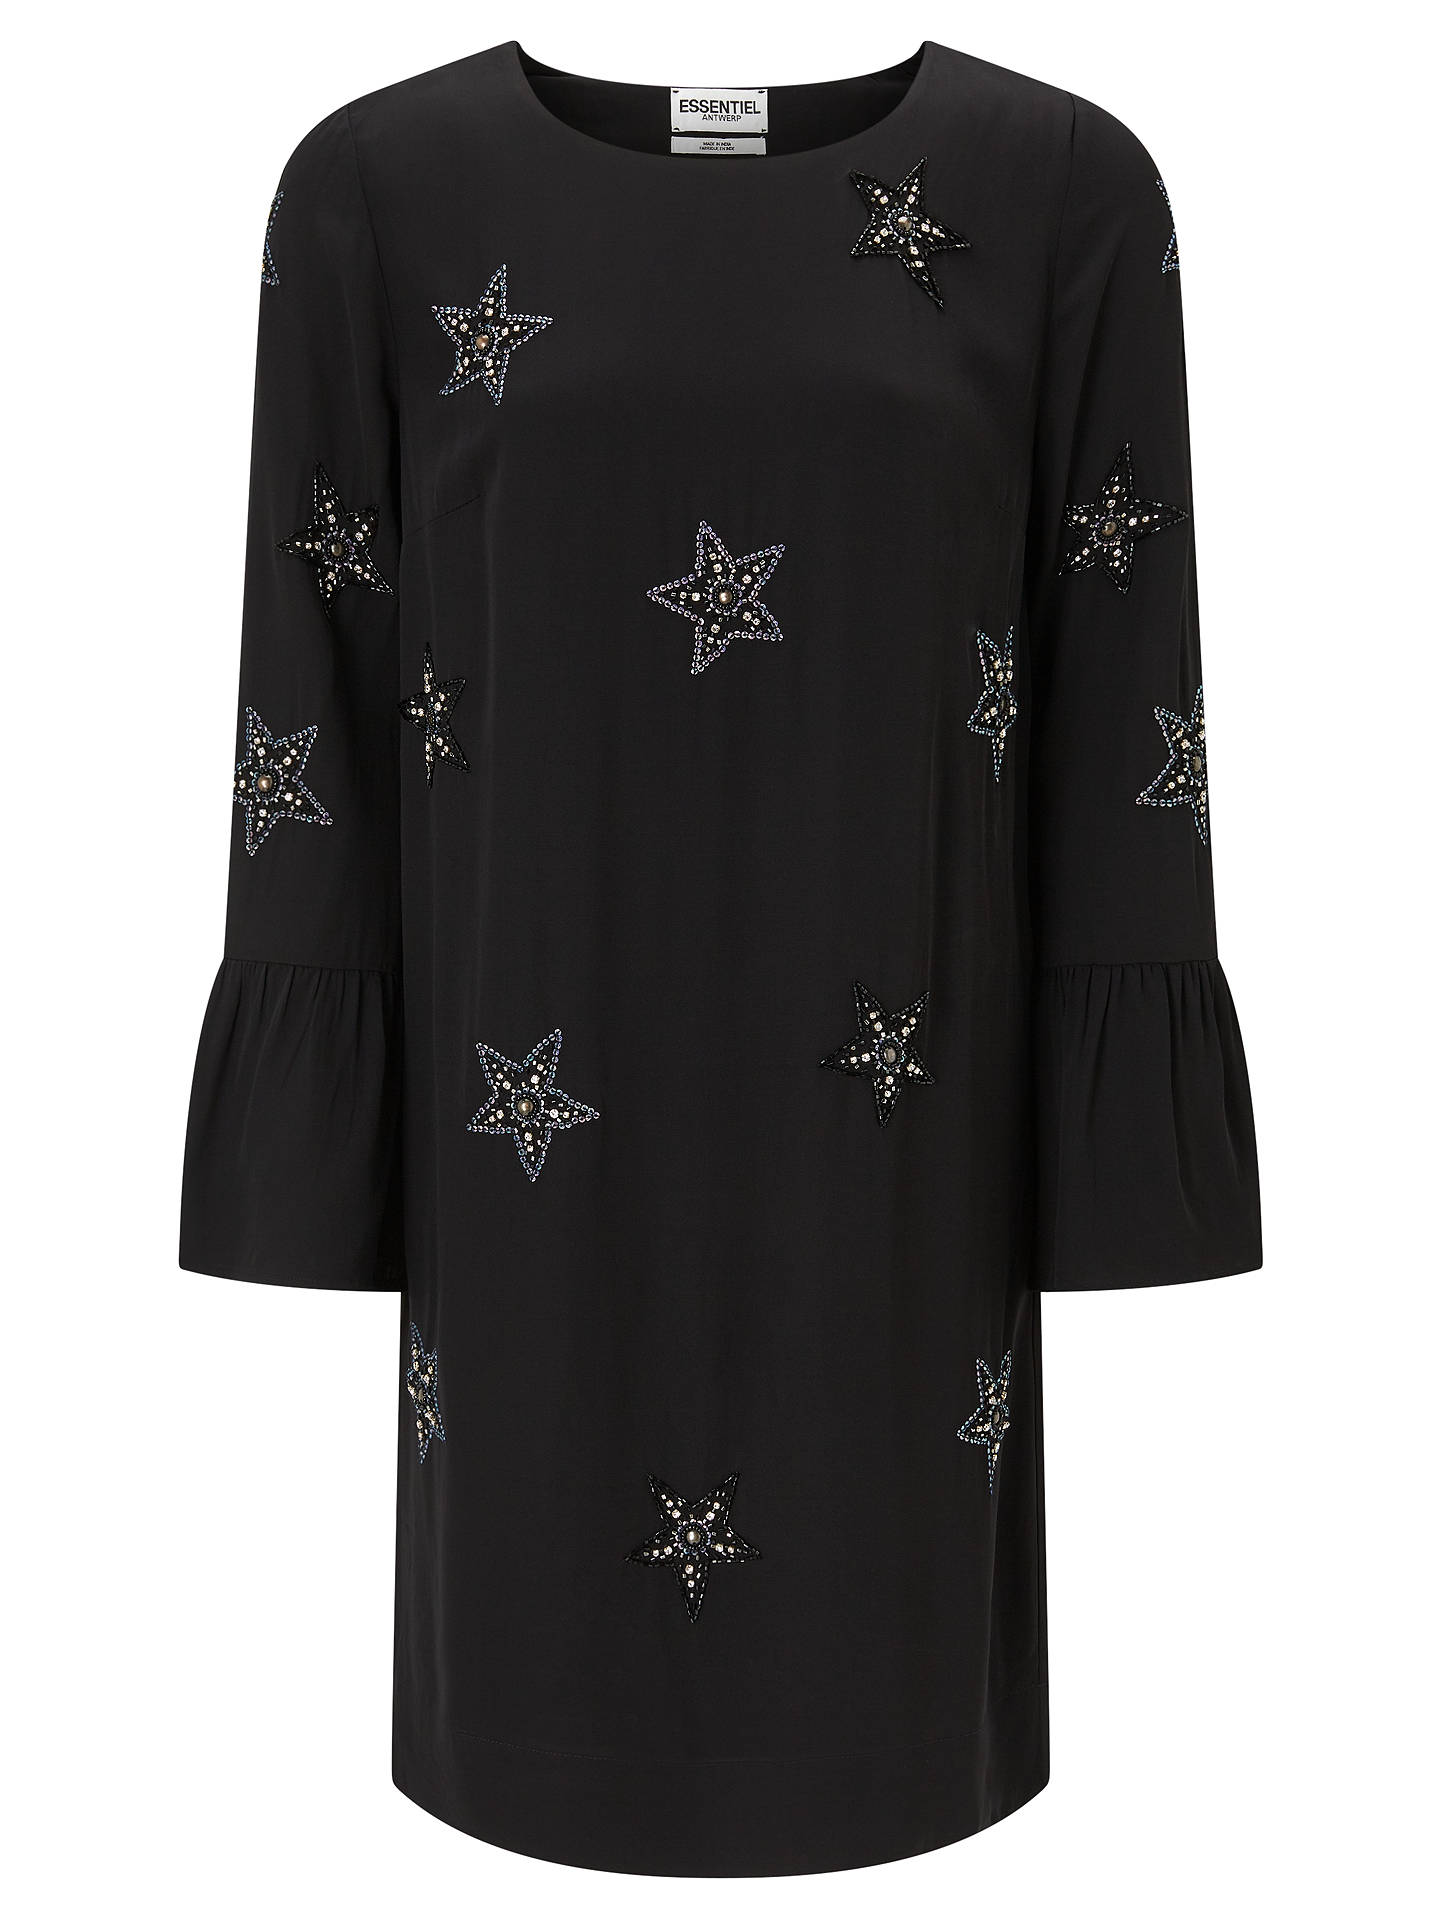 Essentiel Antwerp Star Embellished Dress, Black at John Lewis & Partners